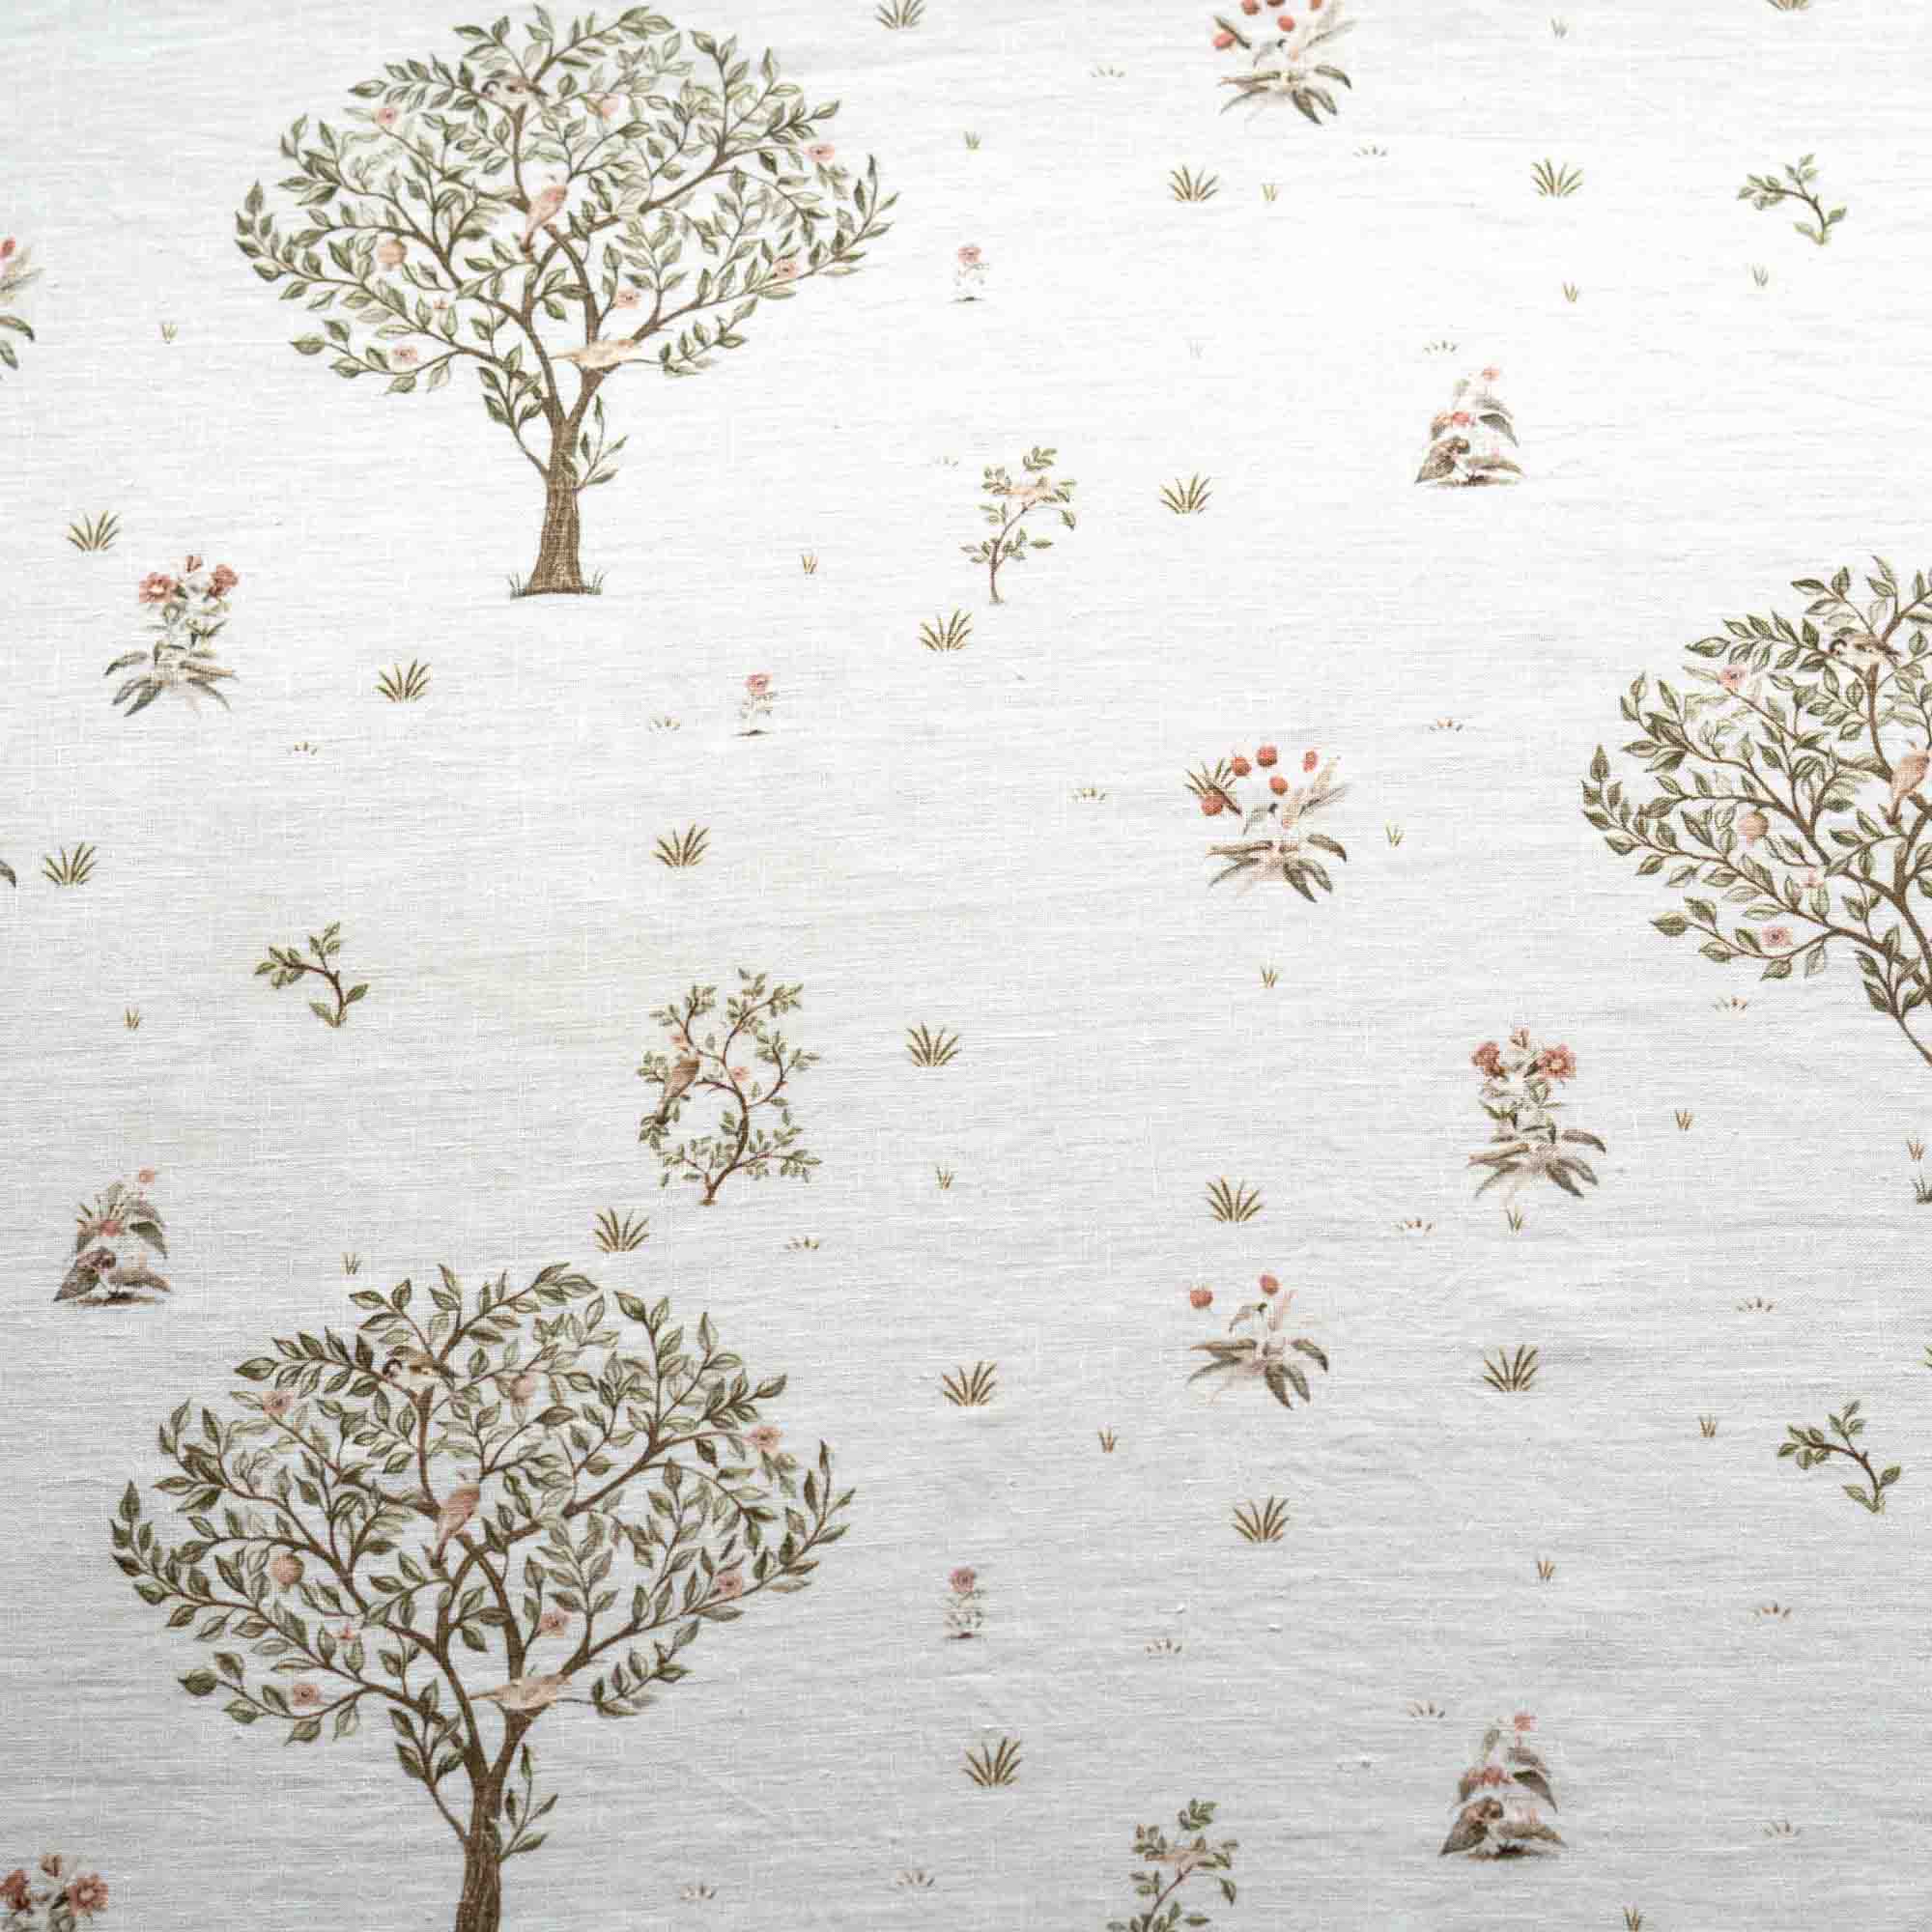 100% Linen Summer Garden Fabric (Horizontal Repeat)